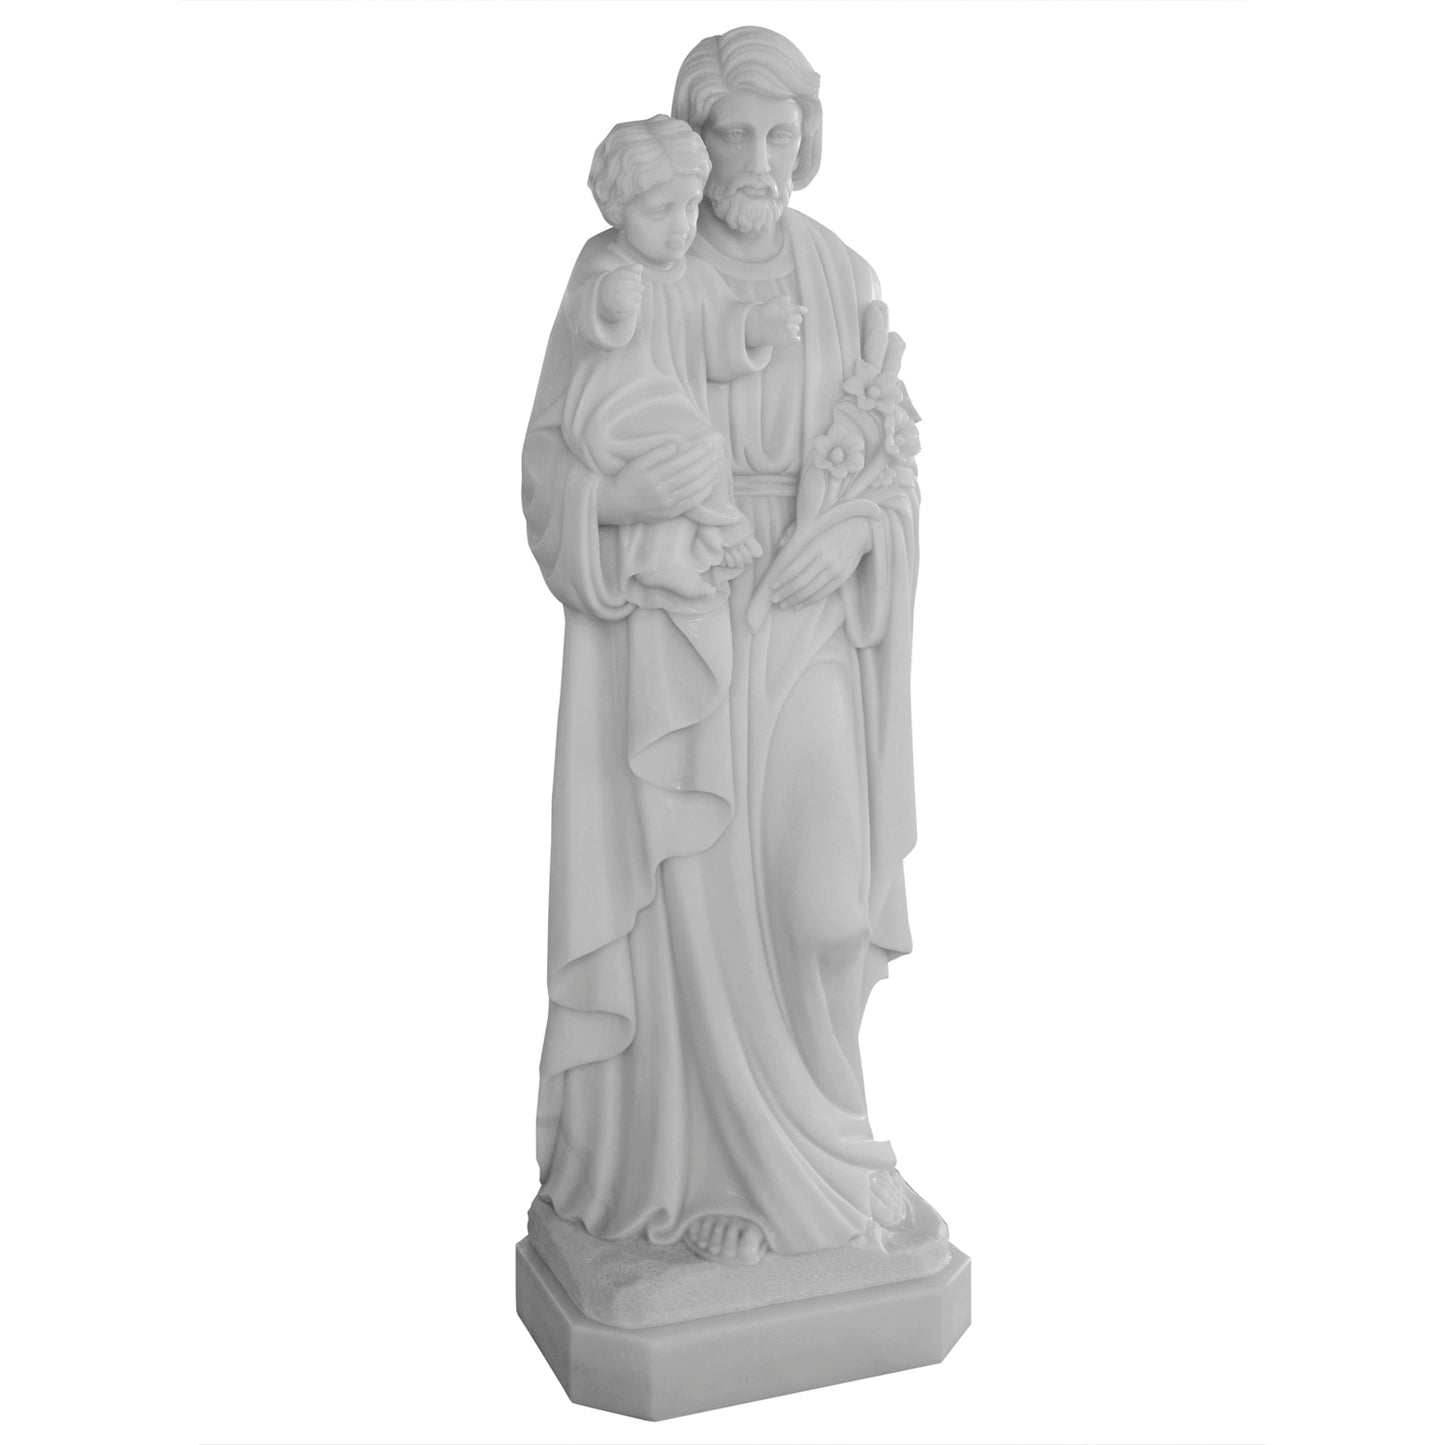 Marble Statue - St. Joseph with Child Jesus